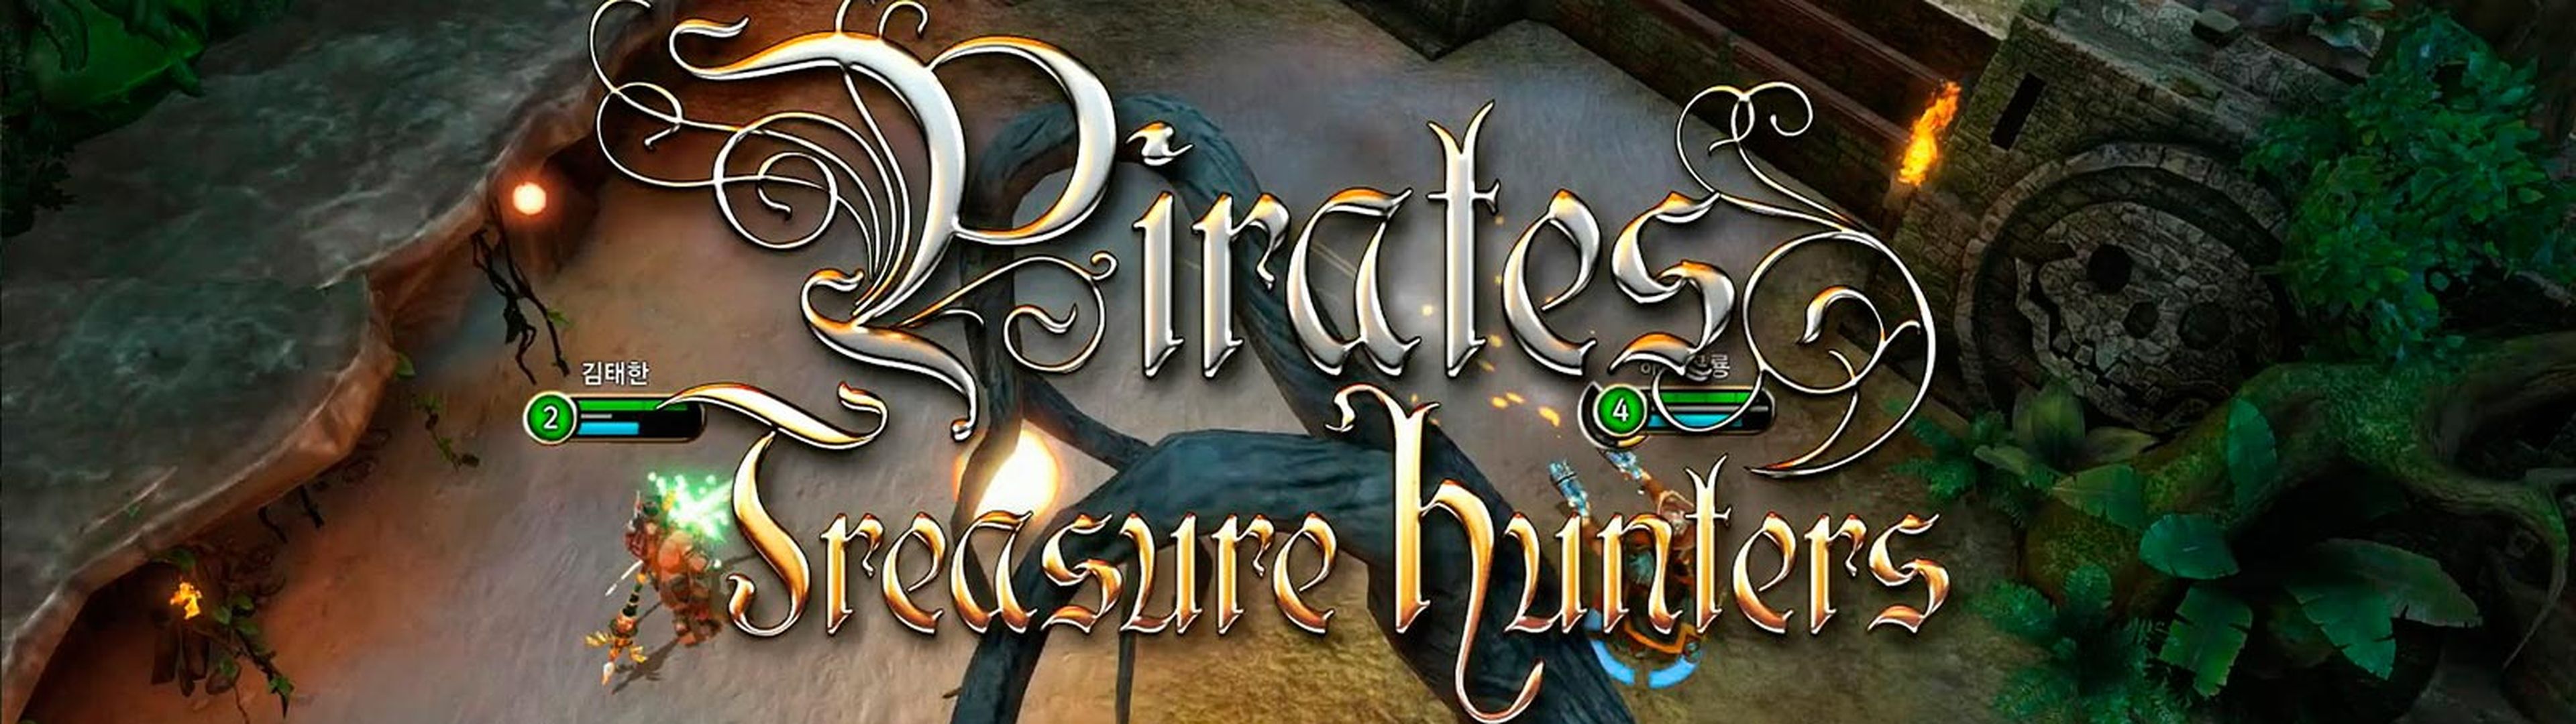 Pirates: Treasure Hunters cabecera